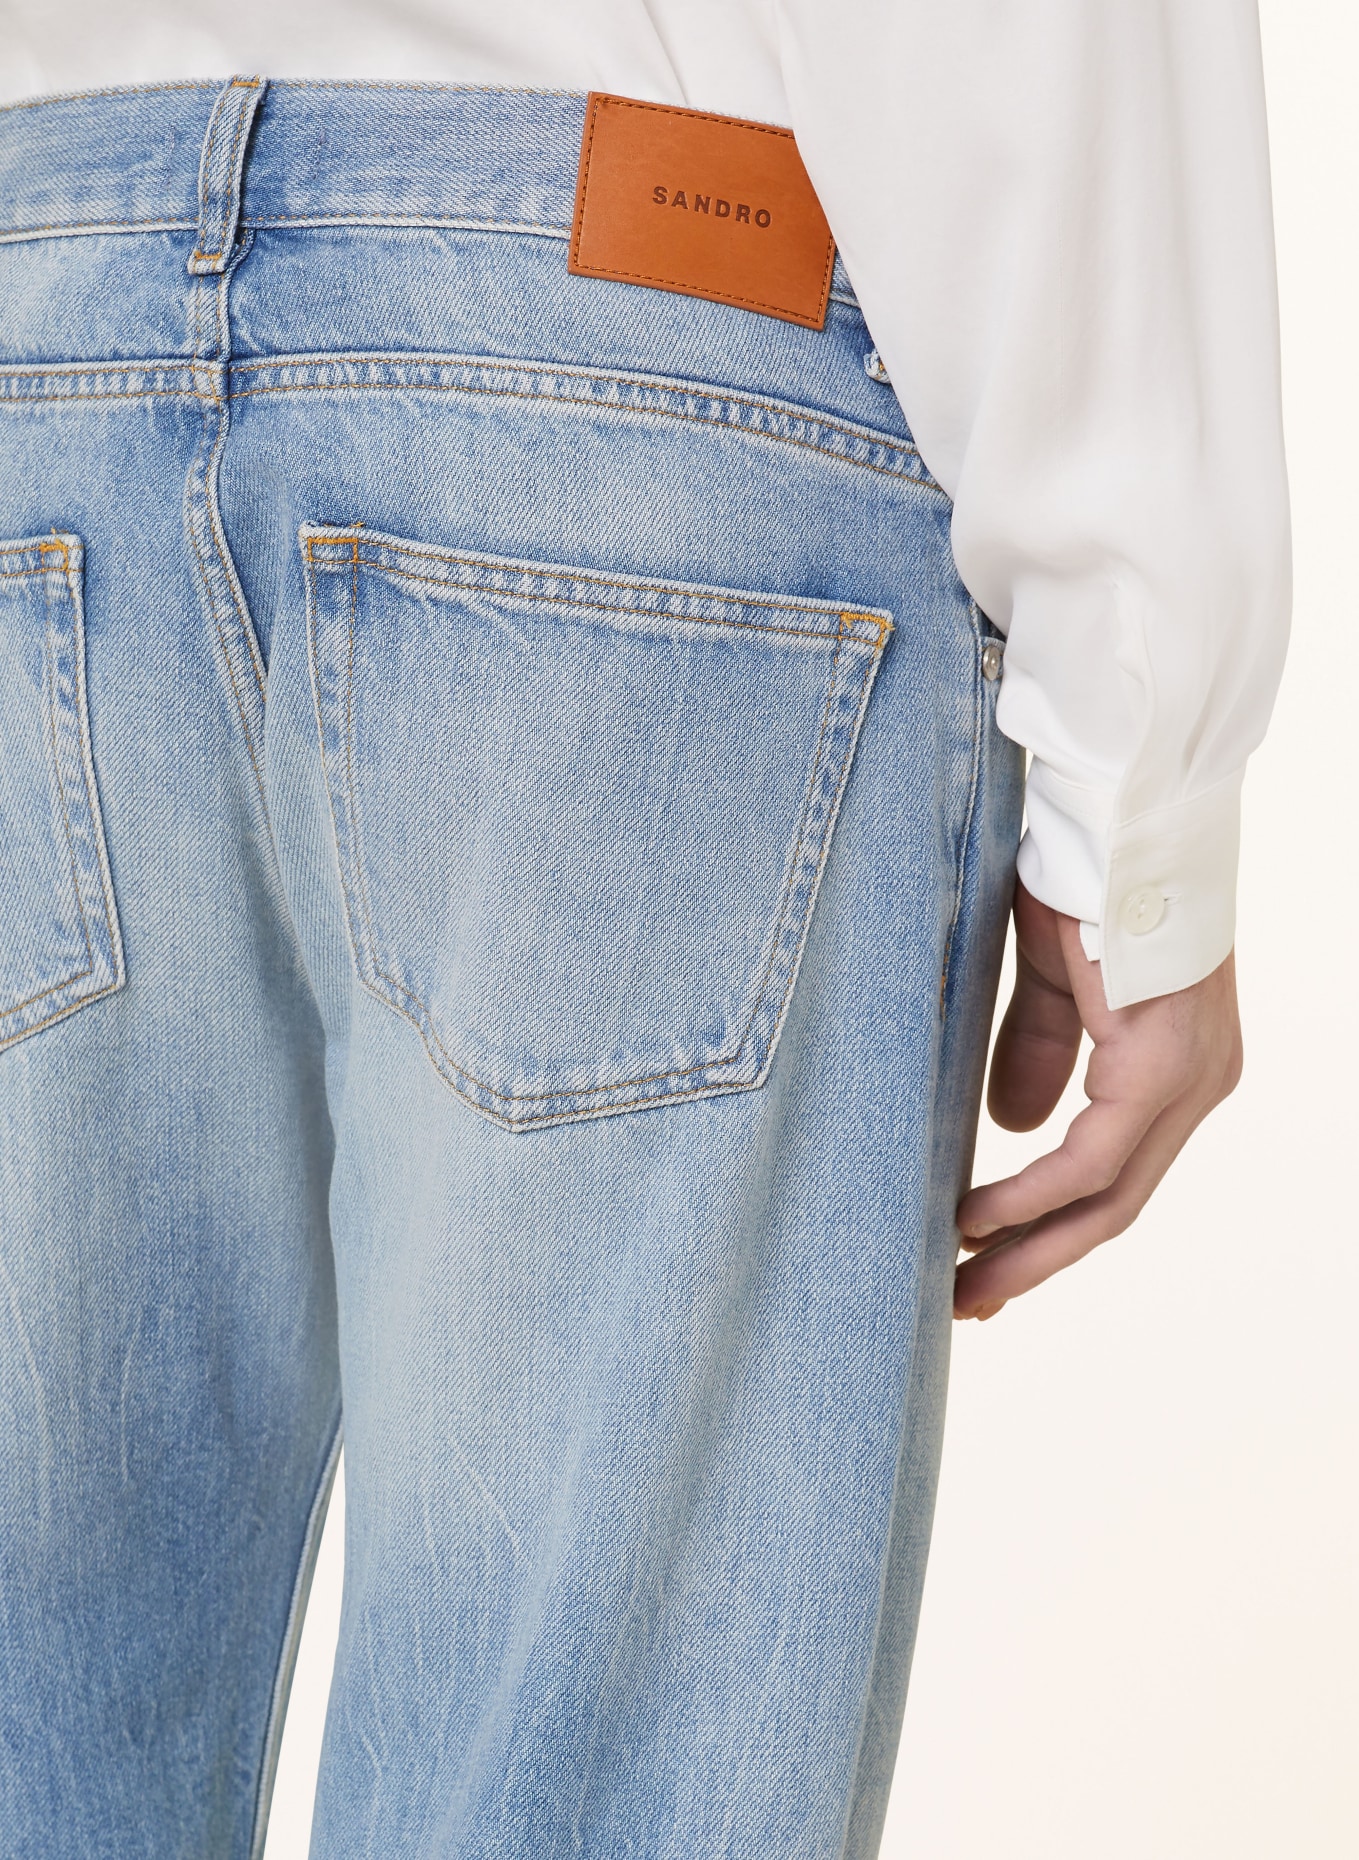 SANDRO Jeans Regular Fit, Farbe: BLUV BLUE VINTAGE - DENIM (Bild 6)